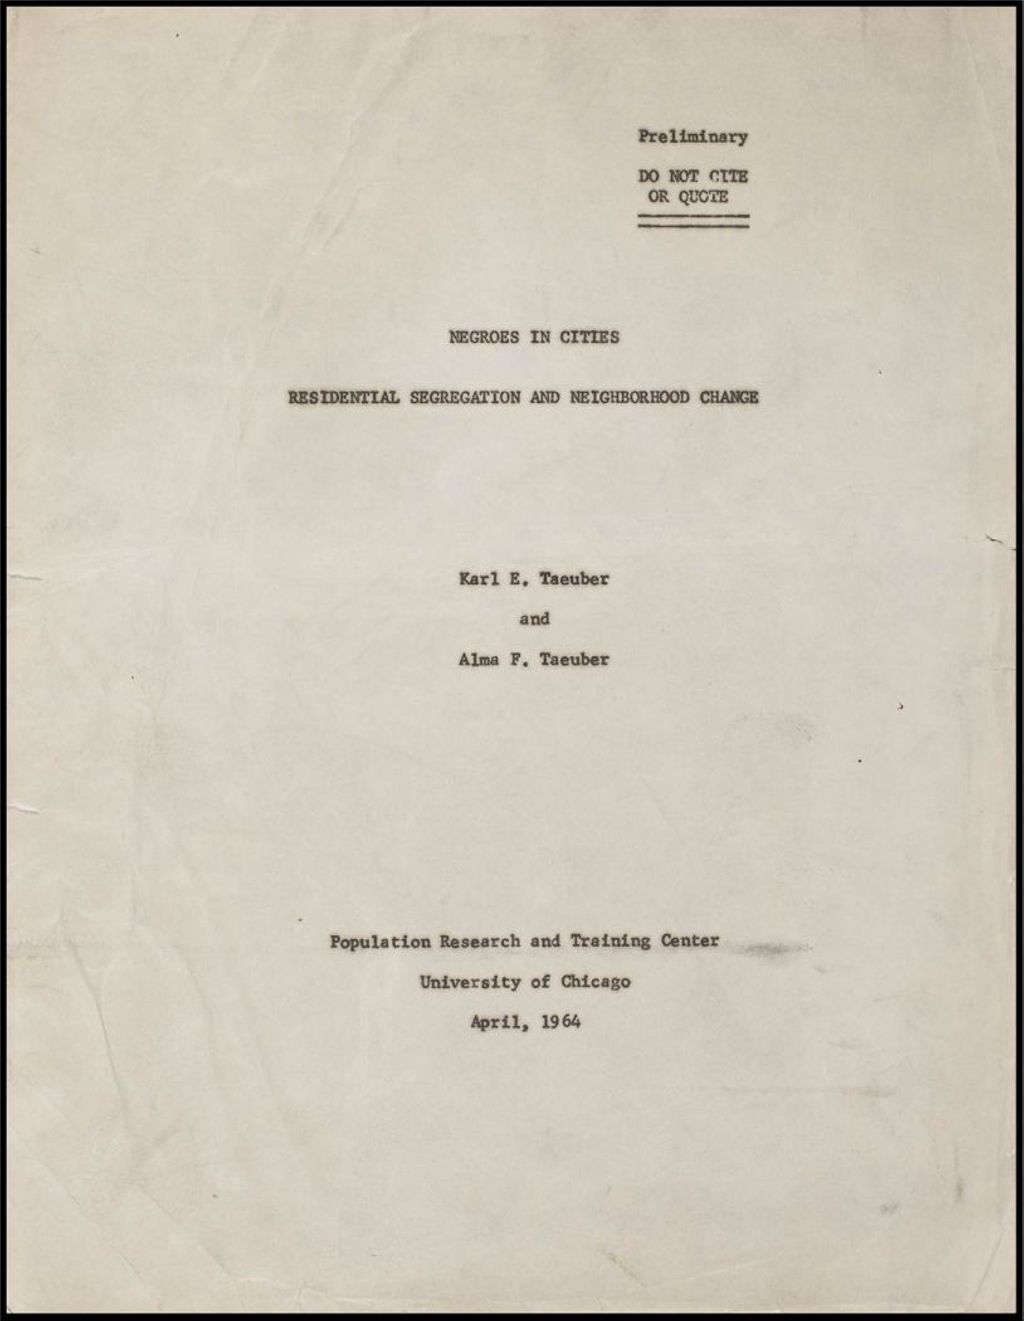 Miniature of U of C "Negro's in Cities" Residential Segregation Neighborhood Change, 1964 (Folder III-510)